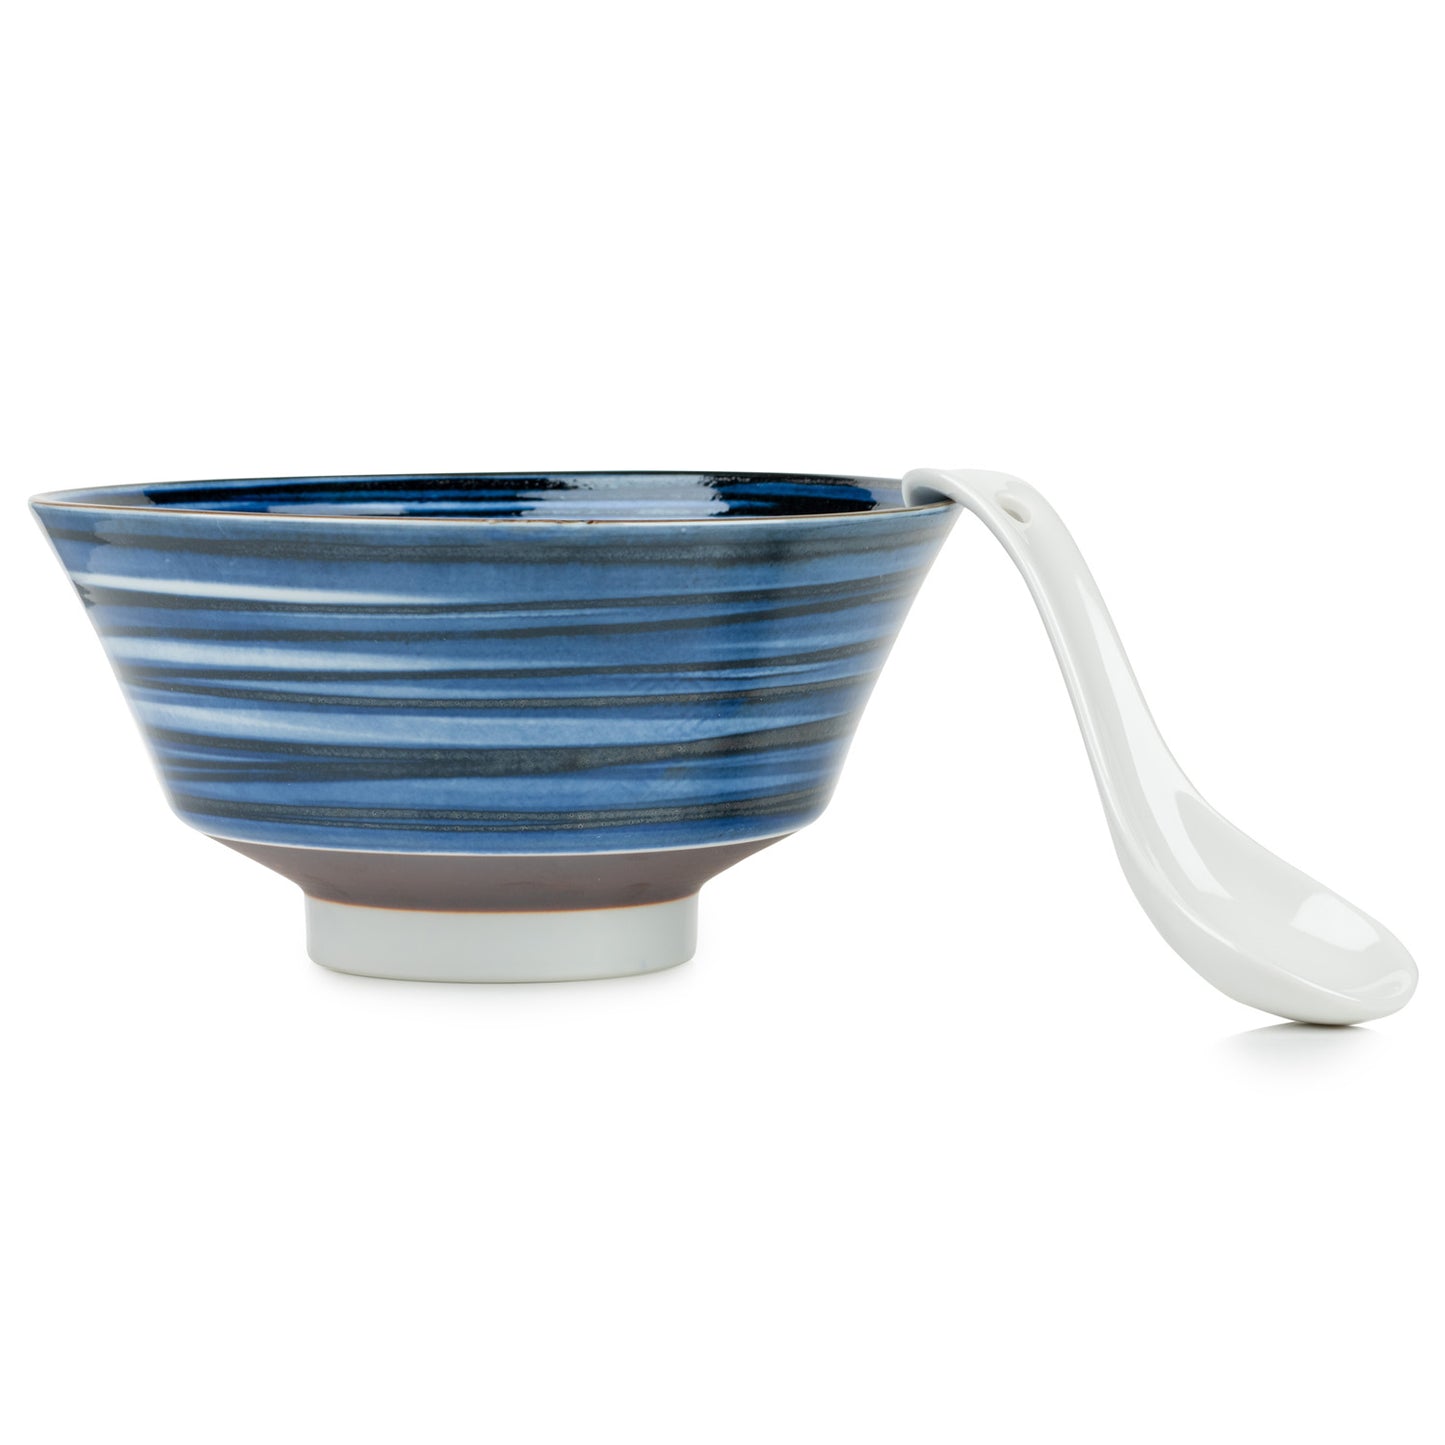 Indigo Blue Line Japanese Ramen Bowl Gift Set and spoon